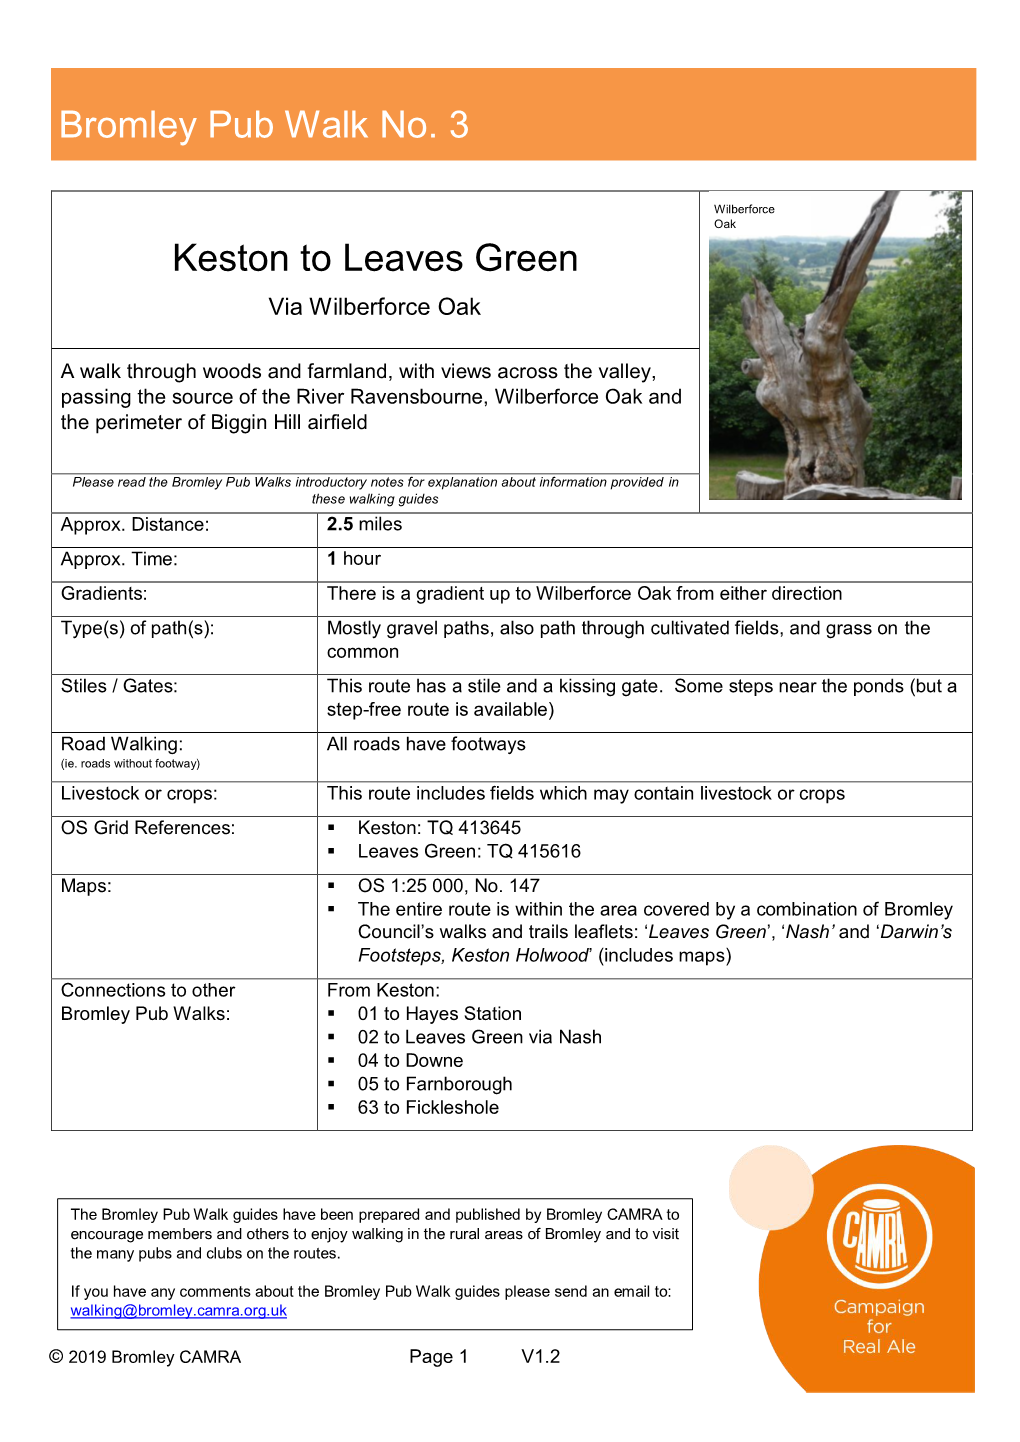 Keston to Leaves Green Via Wilberforce Oak